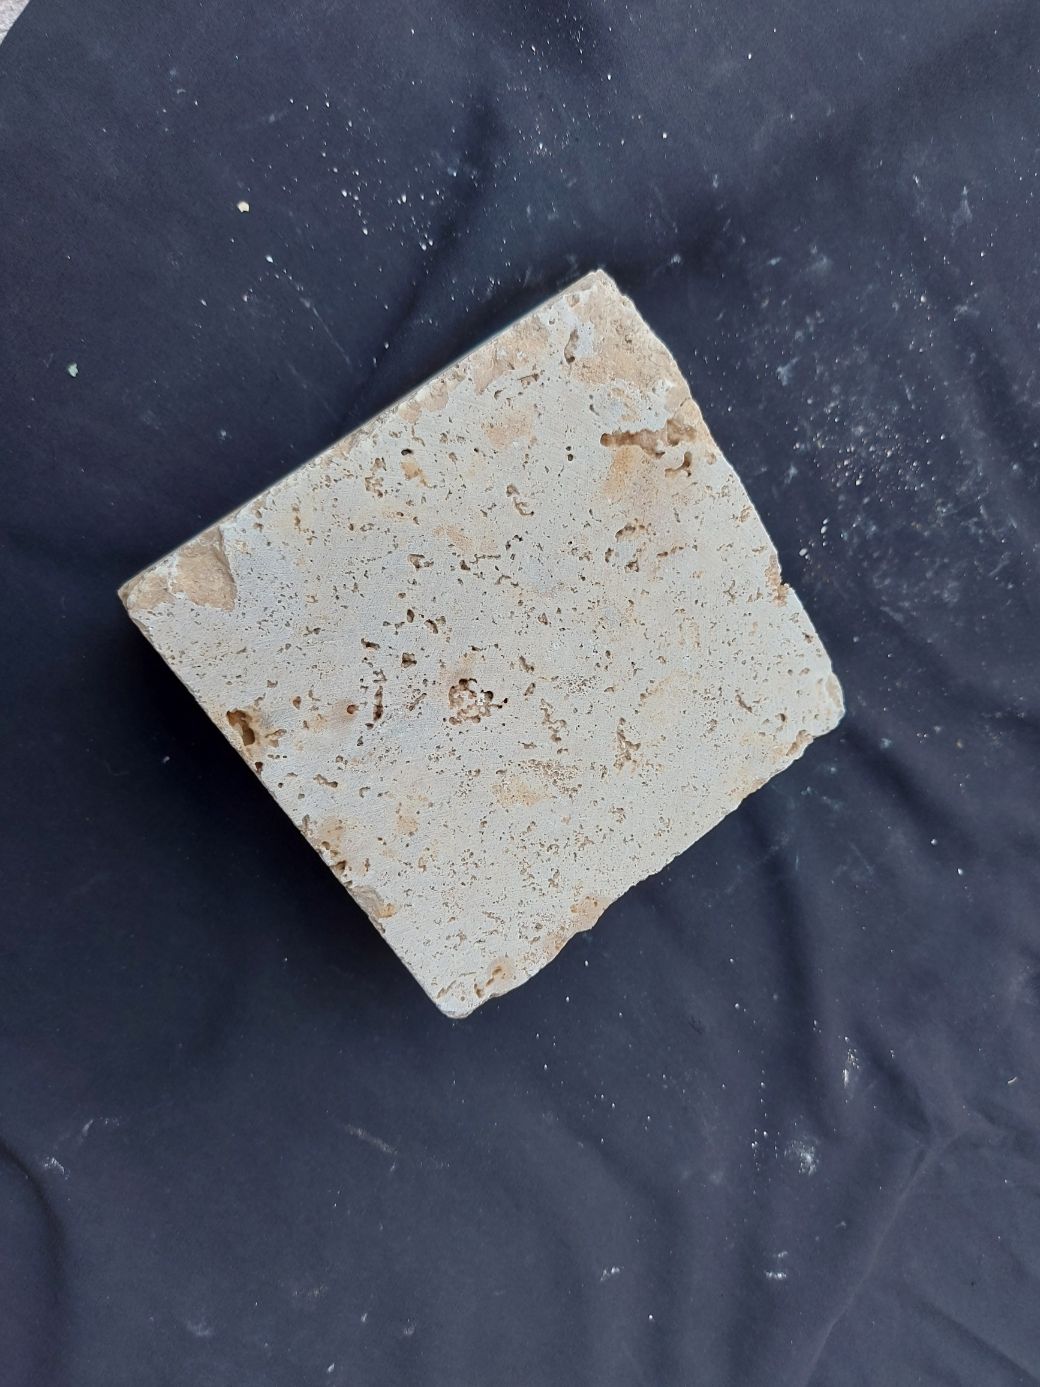 Cubic Isp stone